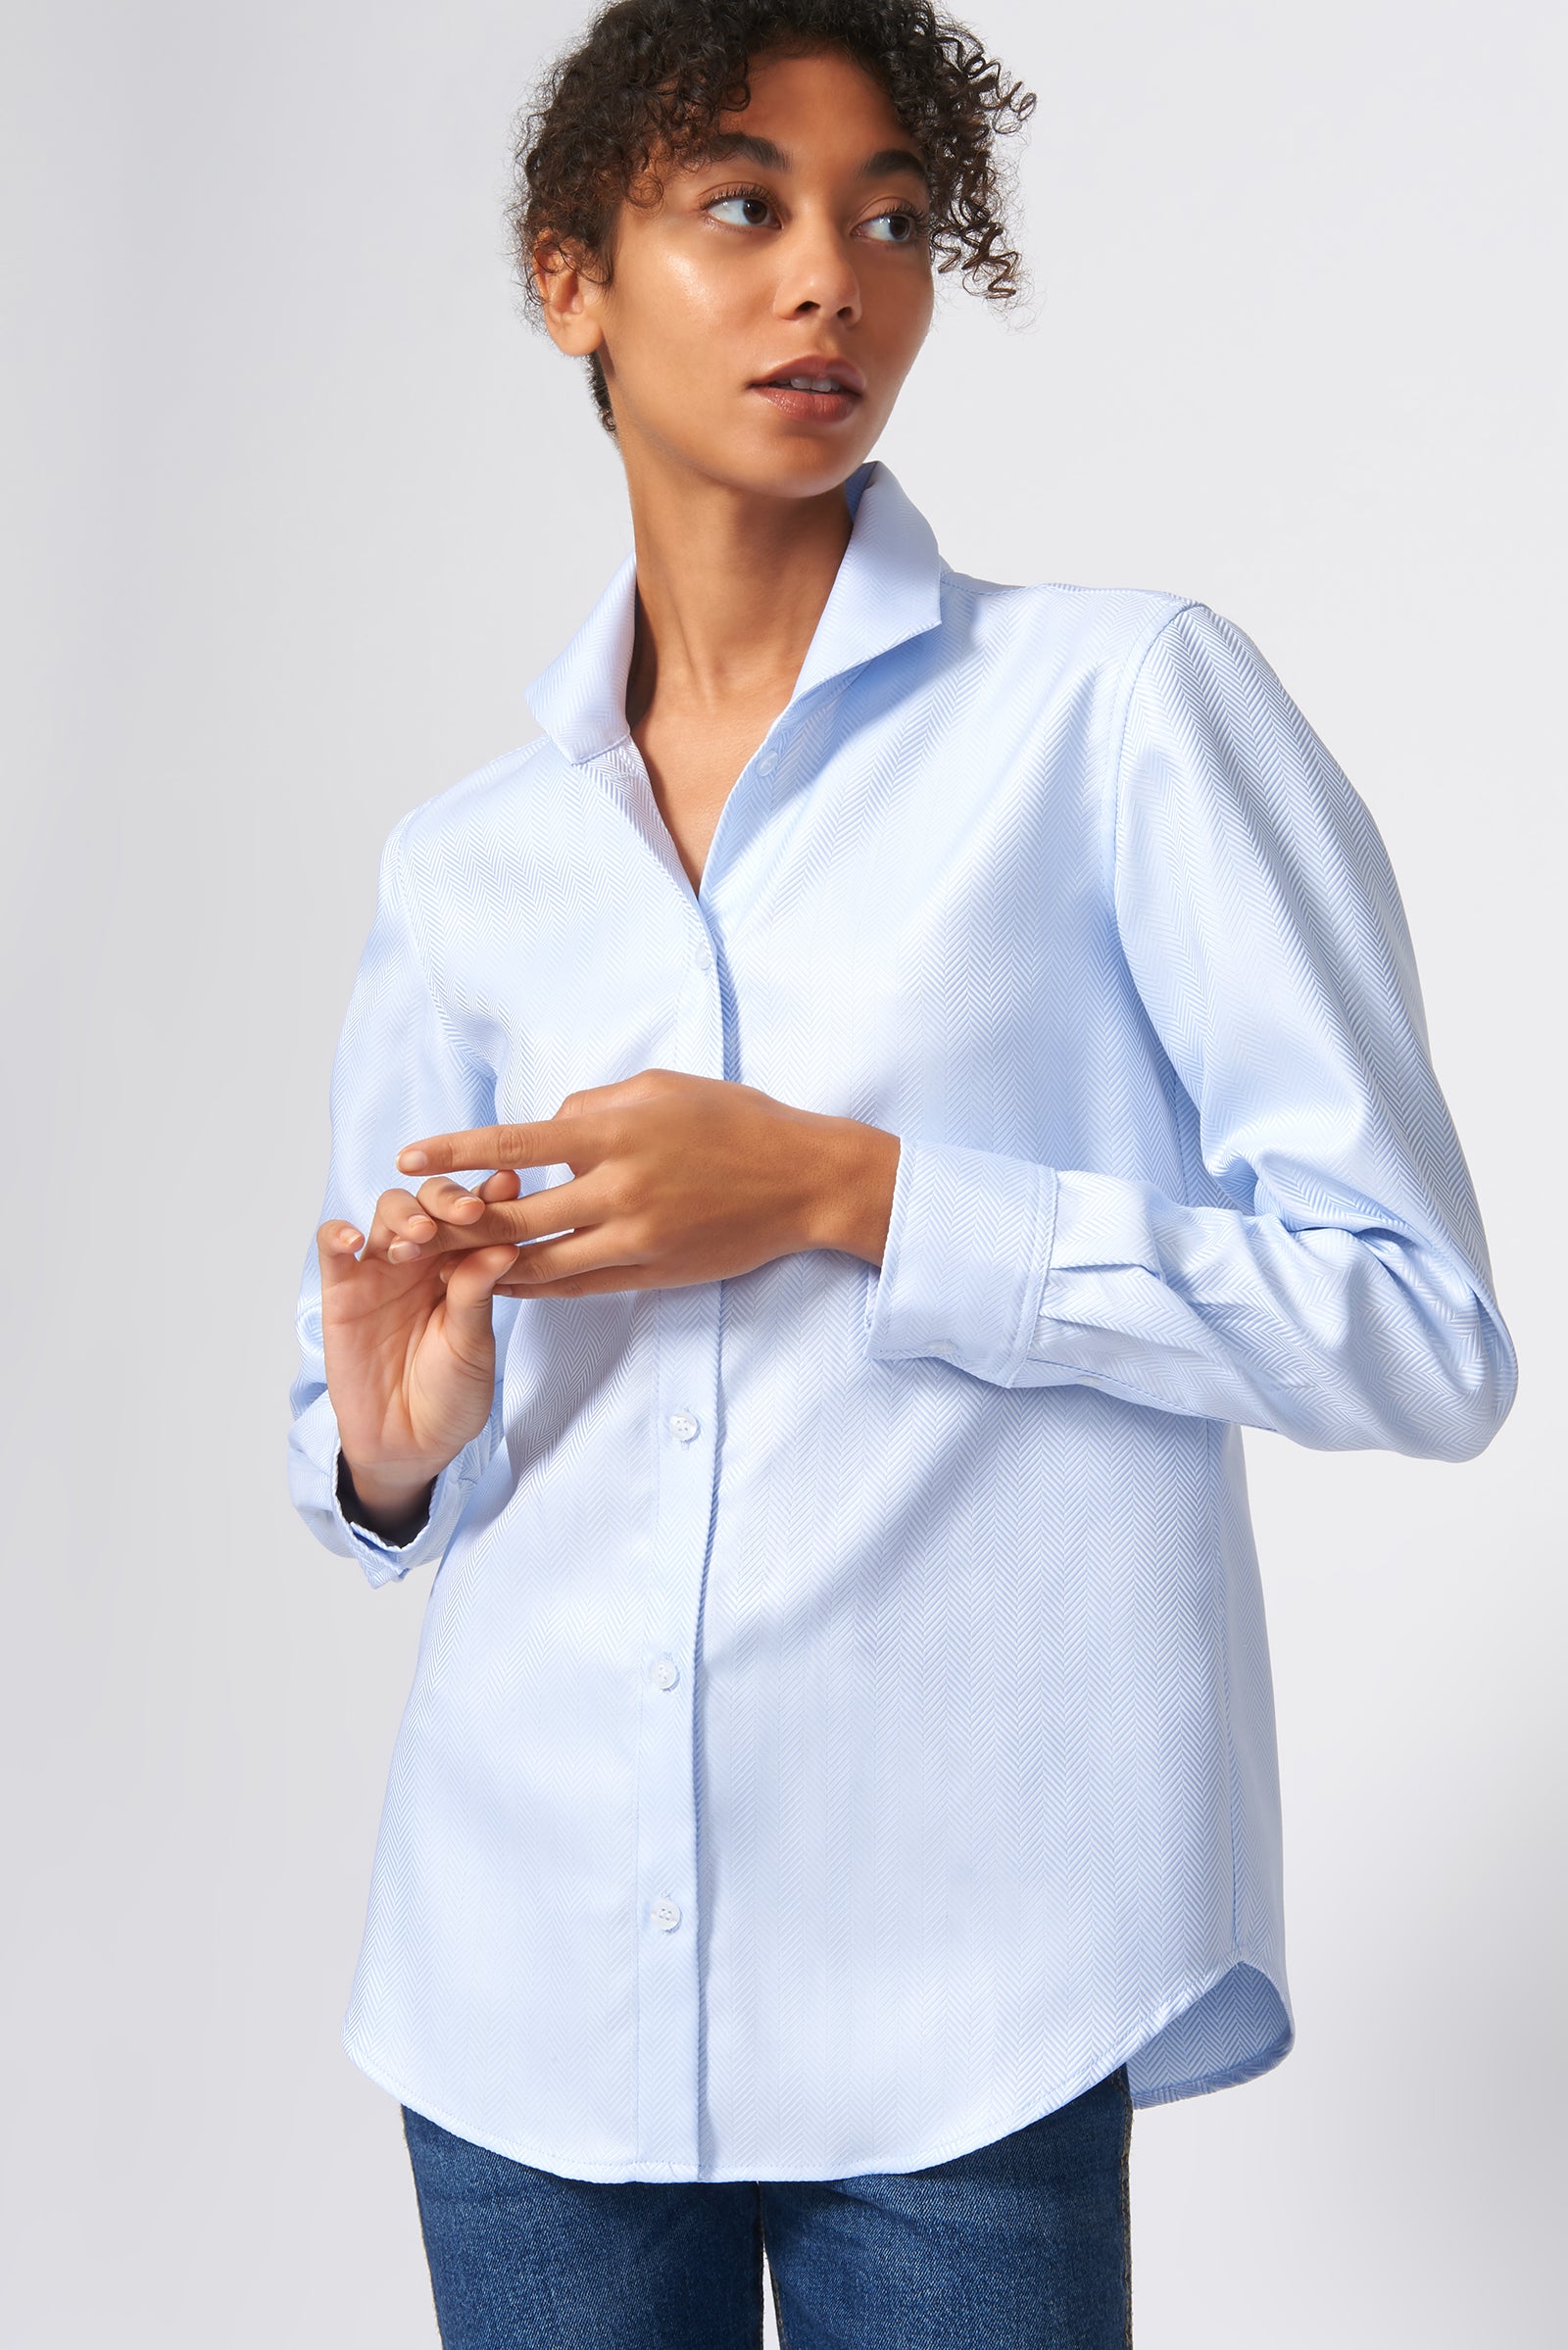 Kal Rieman Ginna Box Pleat Shirt in French Blue Herringbone on Model Front View